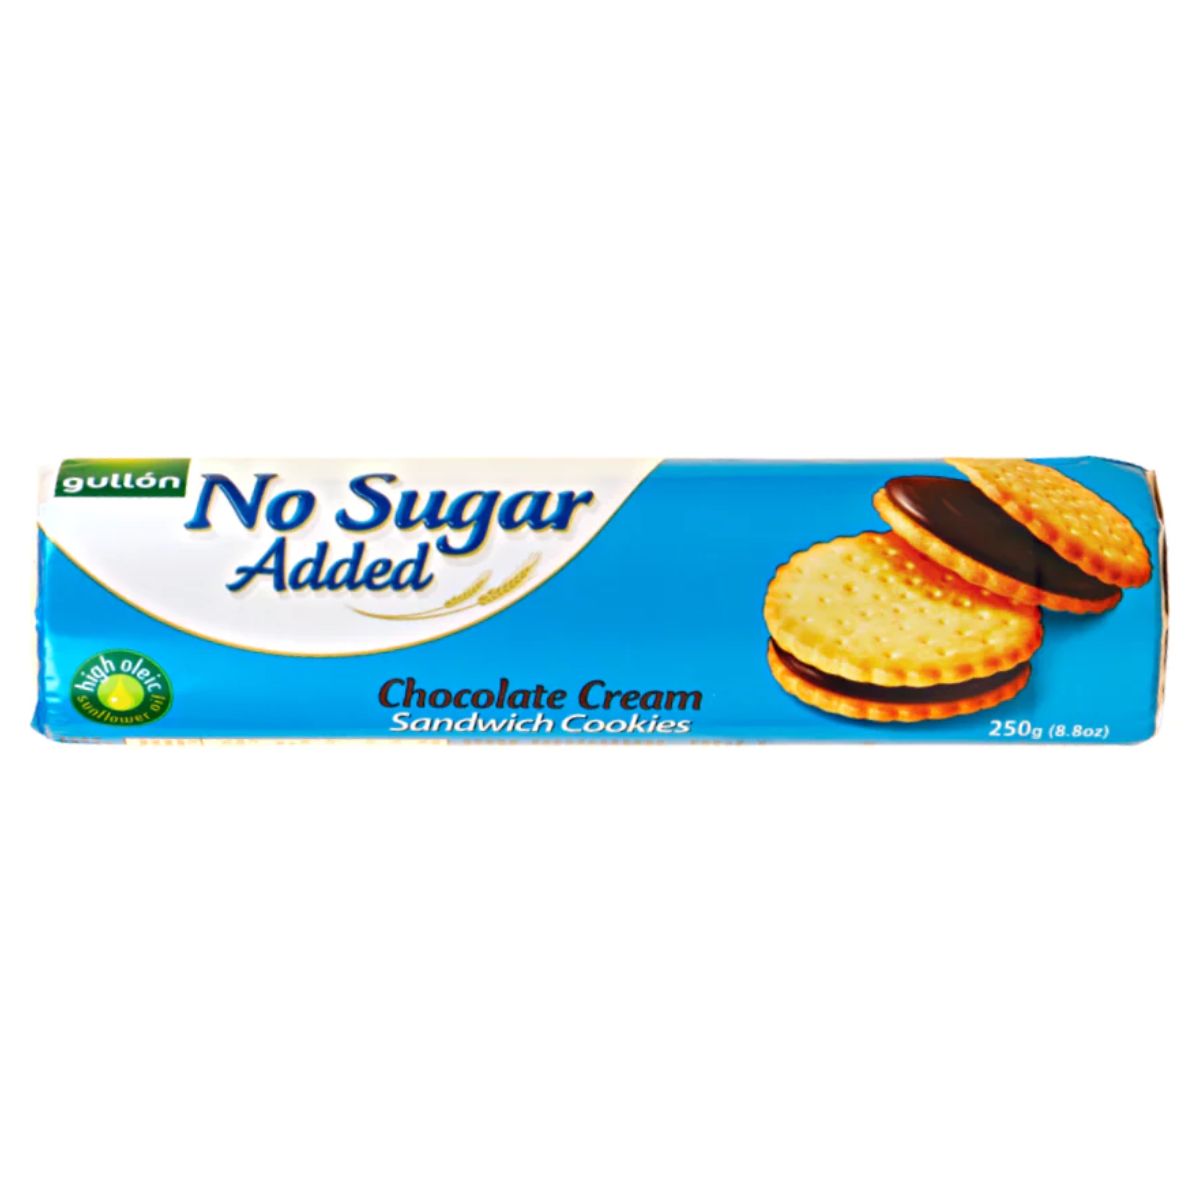 No sugar added Gullon - Chocolate Sandwich Creams Cookies - 200g.